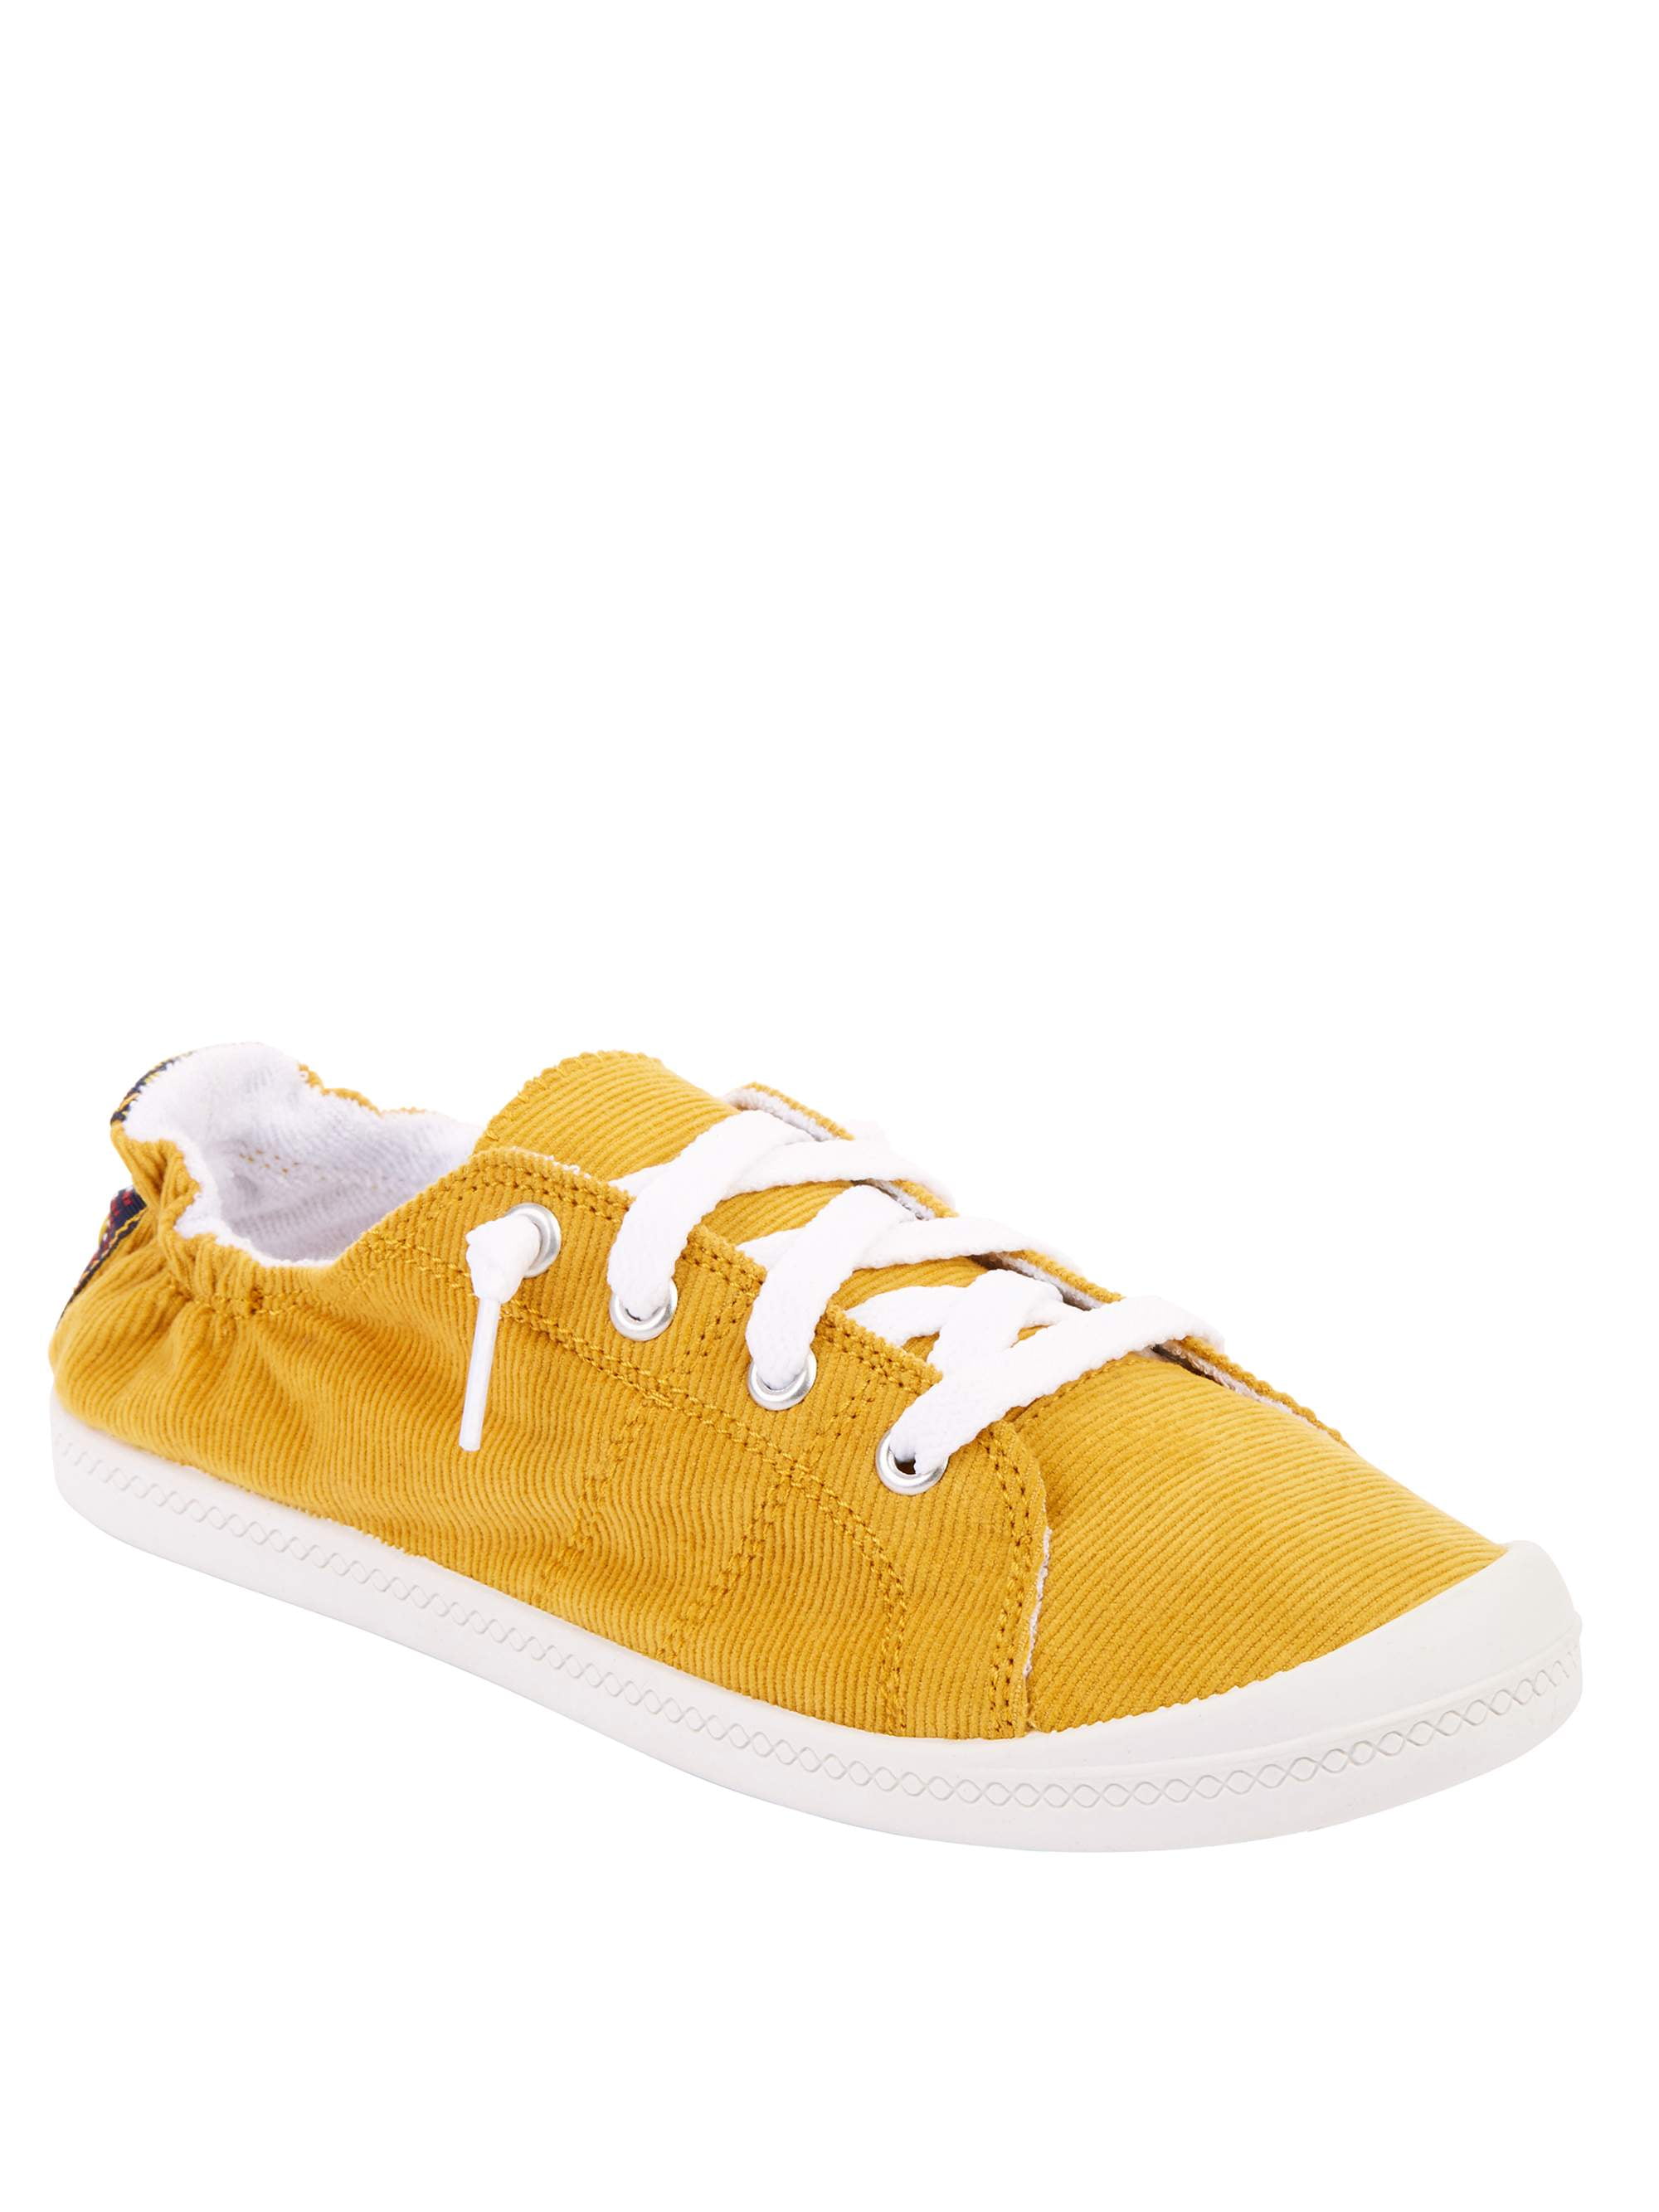 mustard color tennis shoes